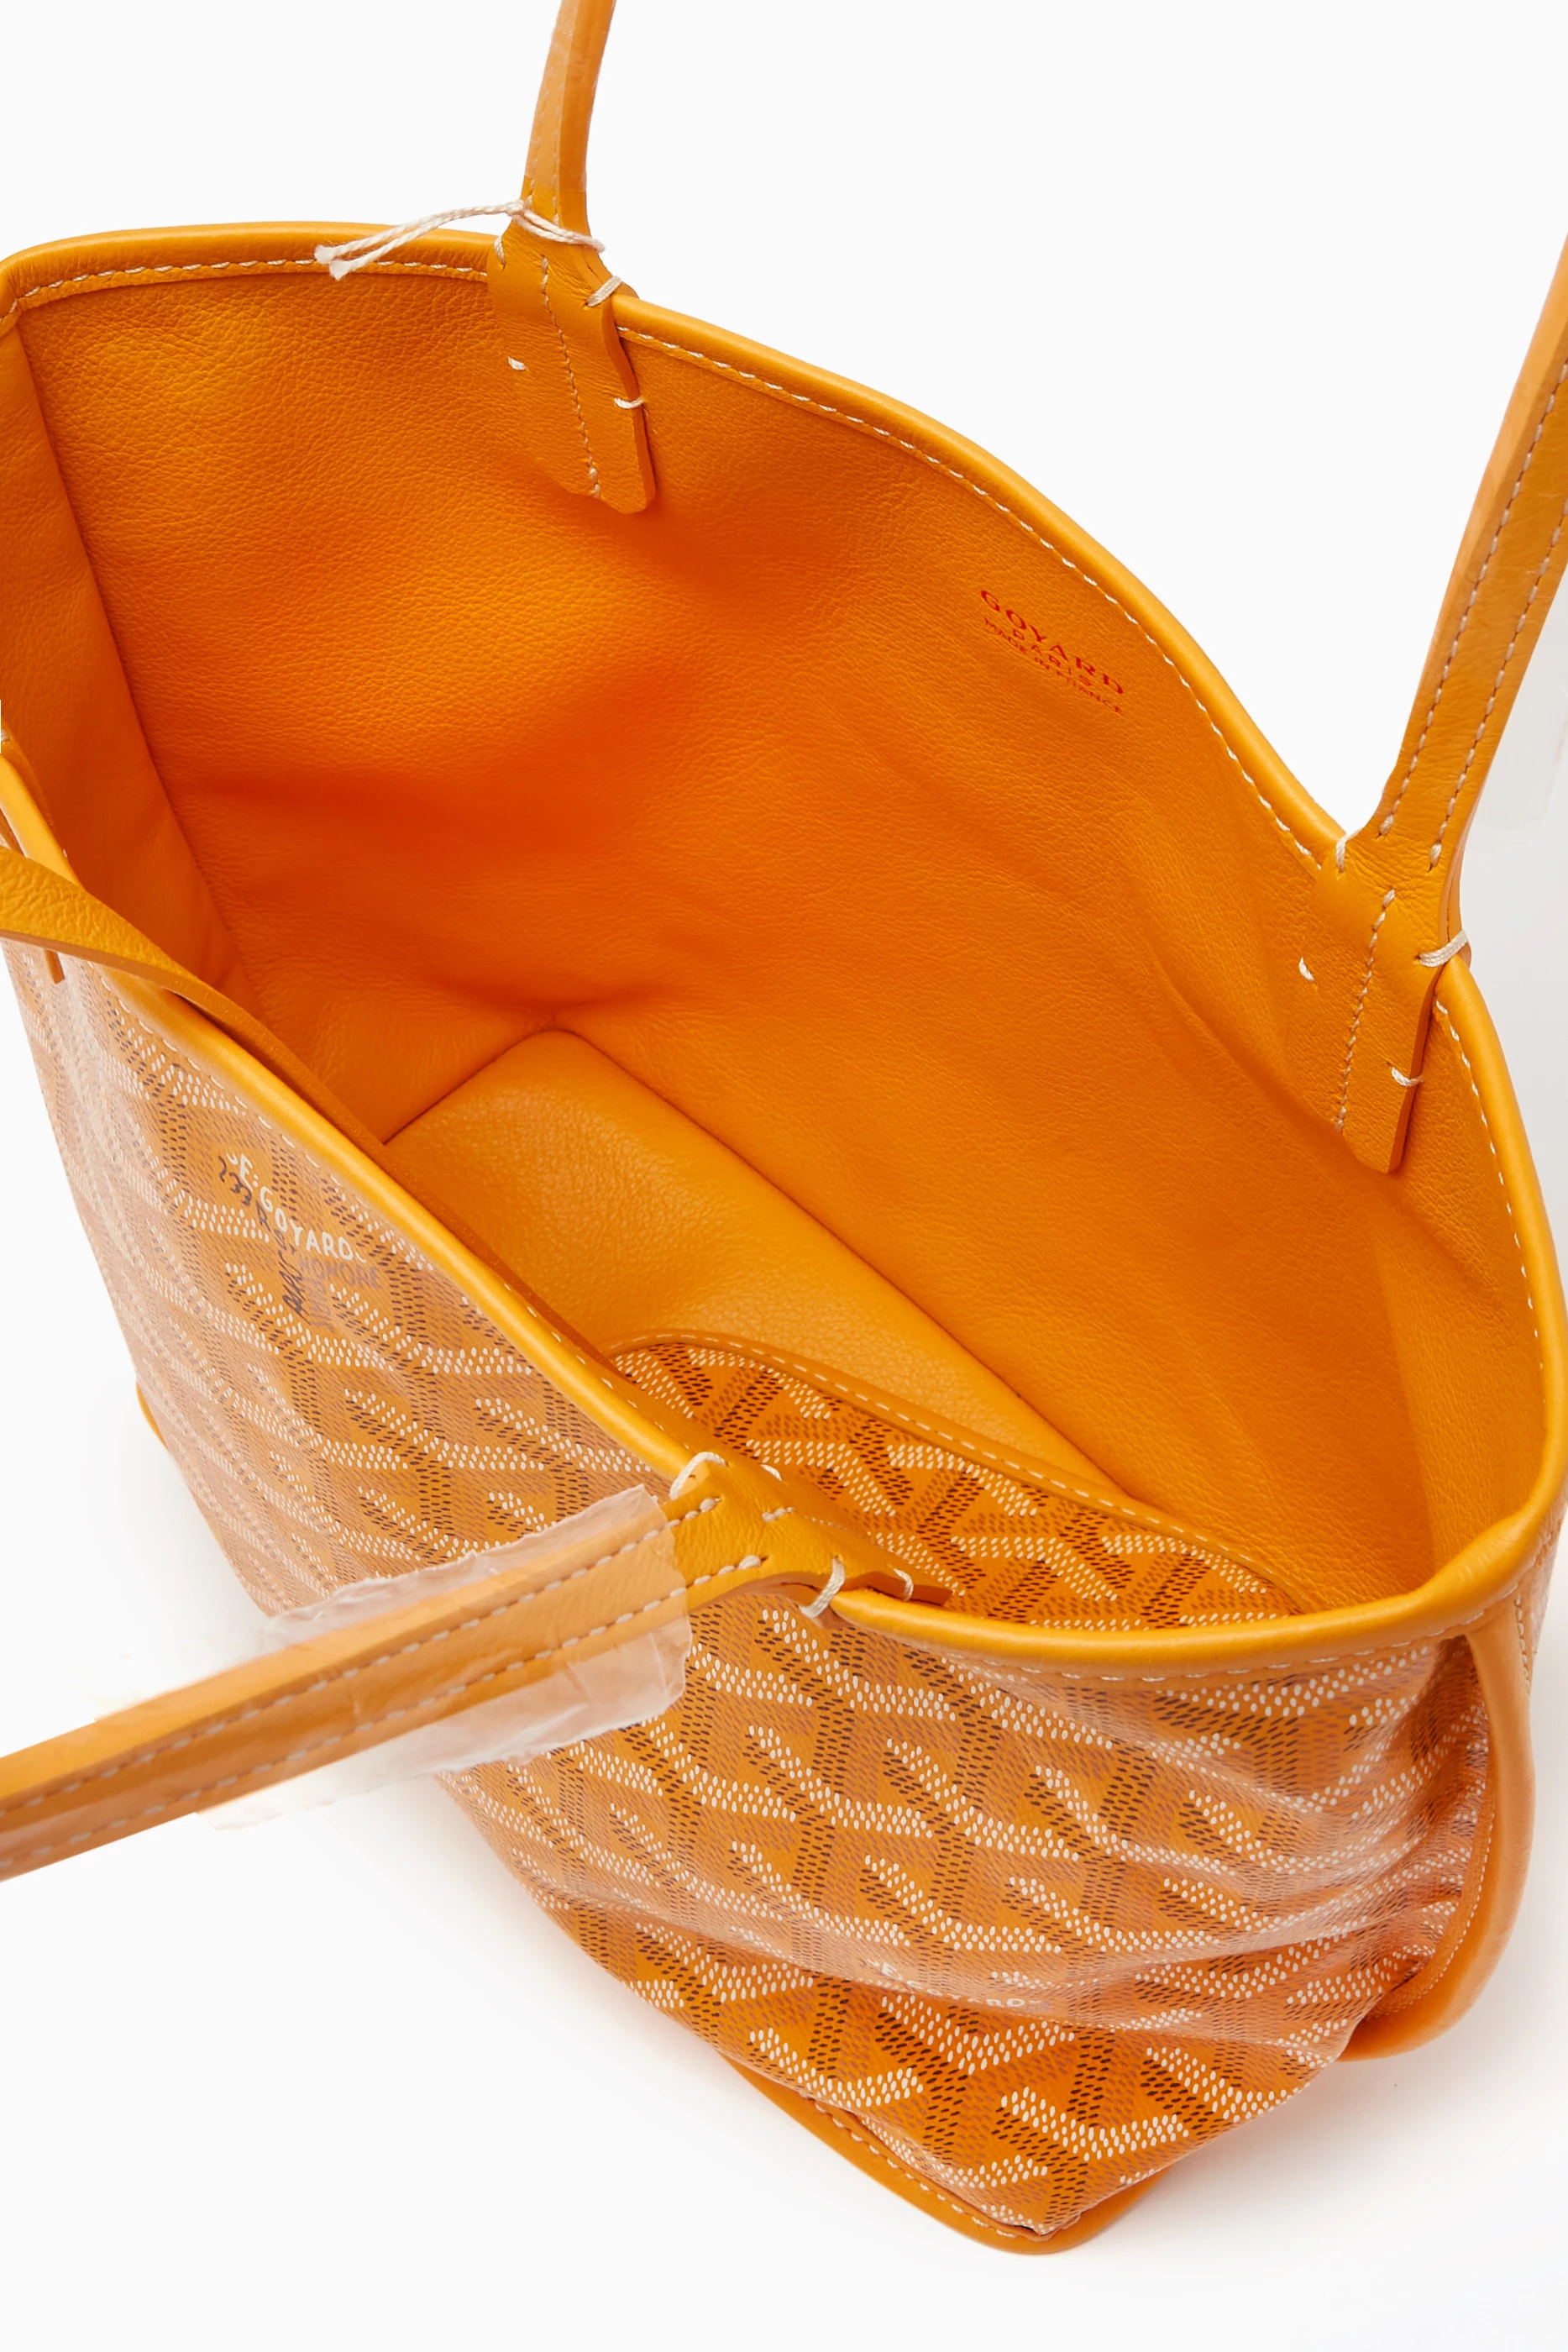 KEEPBLING Nylon Bag in Bag for Goyard Anjou Mini Organizer Inner with a  Zipper Closer Waterproof (SAND): Buy Online at Best Price in UAE 